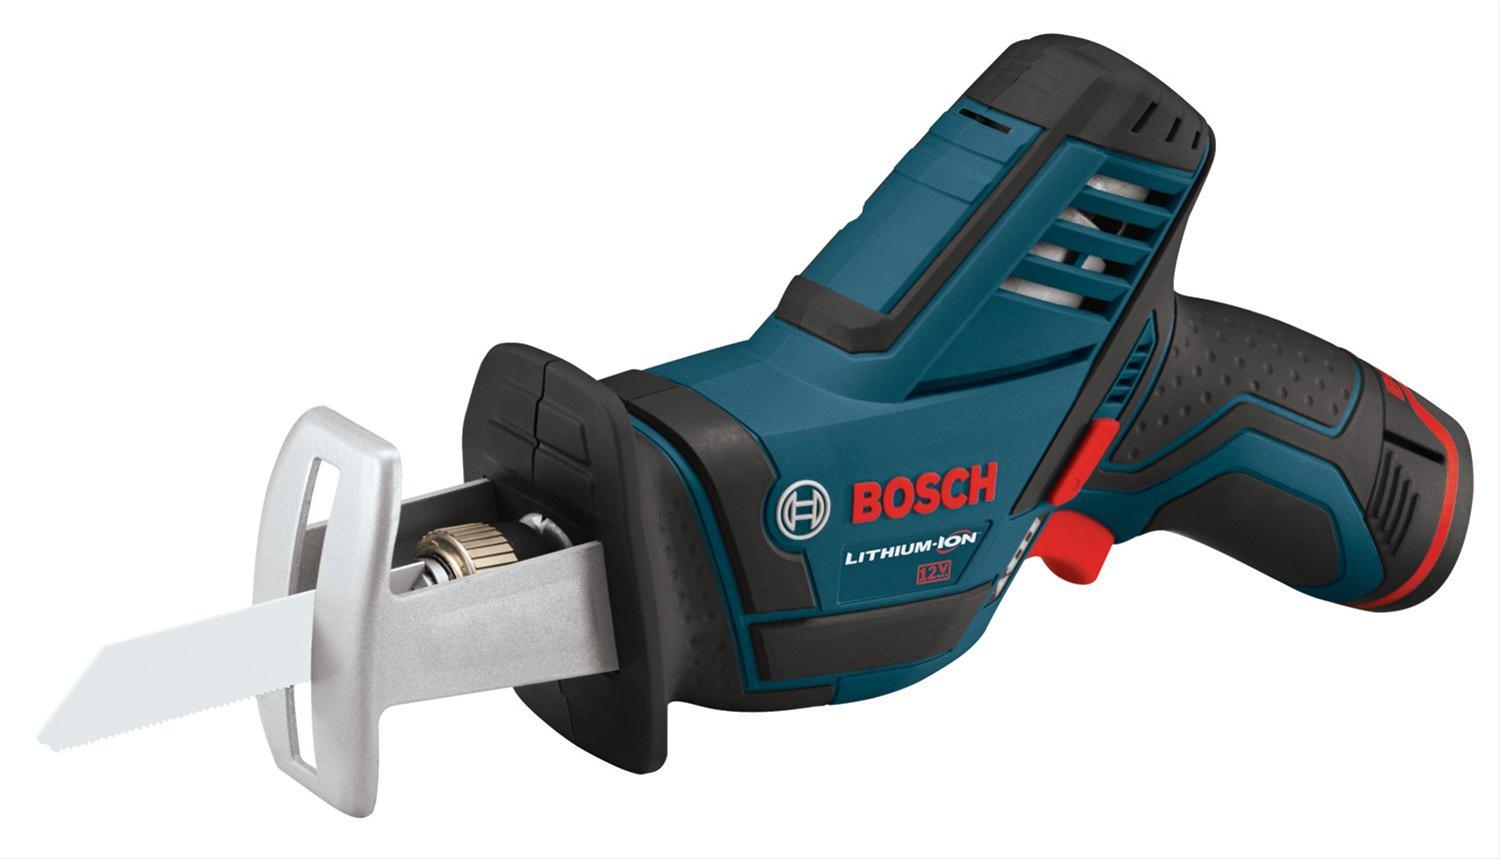 Аккумуляторные сабельные пилы Bosch 12v. Сабельная пила Bosch 12v. Сабельная ножовка бош 10.8 вольт. Сабельная пила Патриот аккумуляторная 12 вольт. Tools аккумуляторная пила